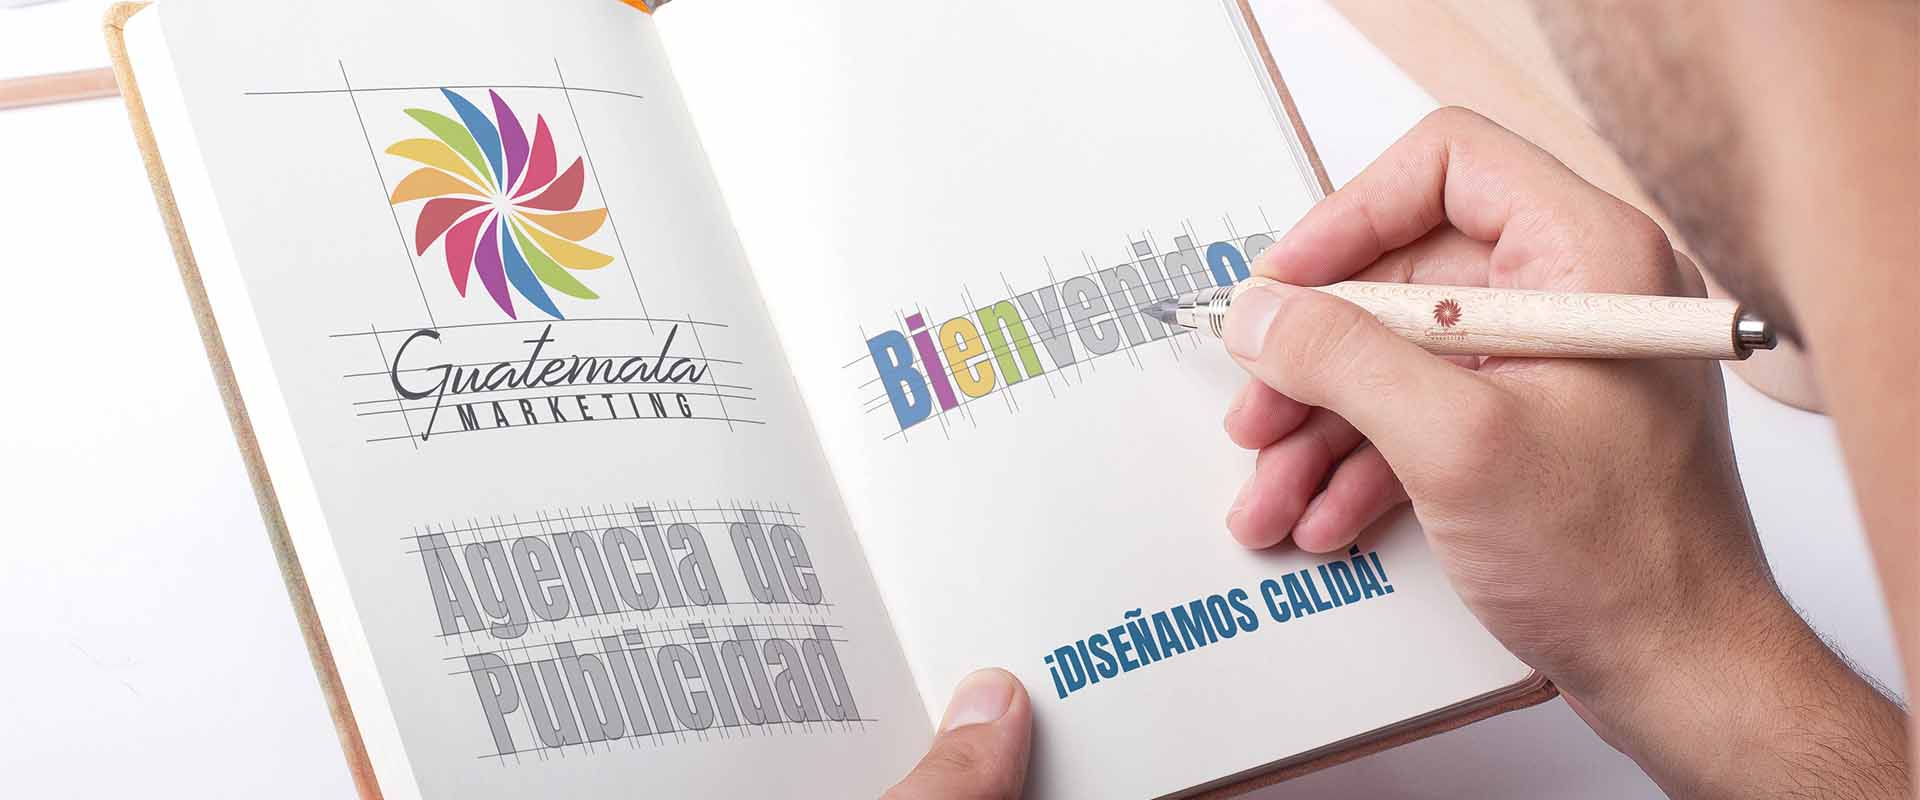 antigua-guatemala-marketing-diseno-grafico-brand-branding-marca-publicidad-agencia